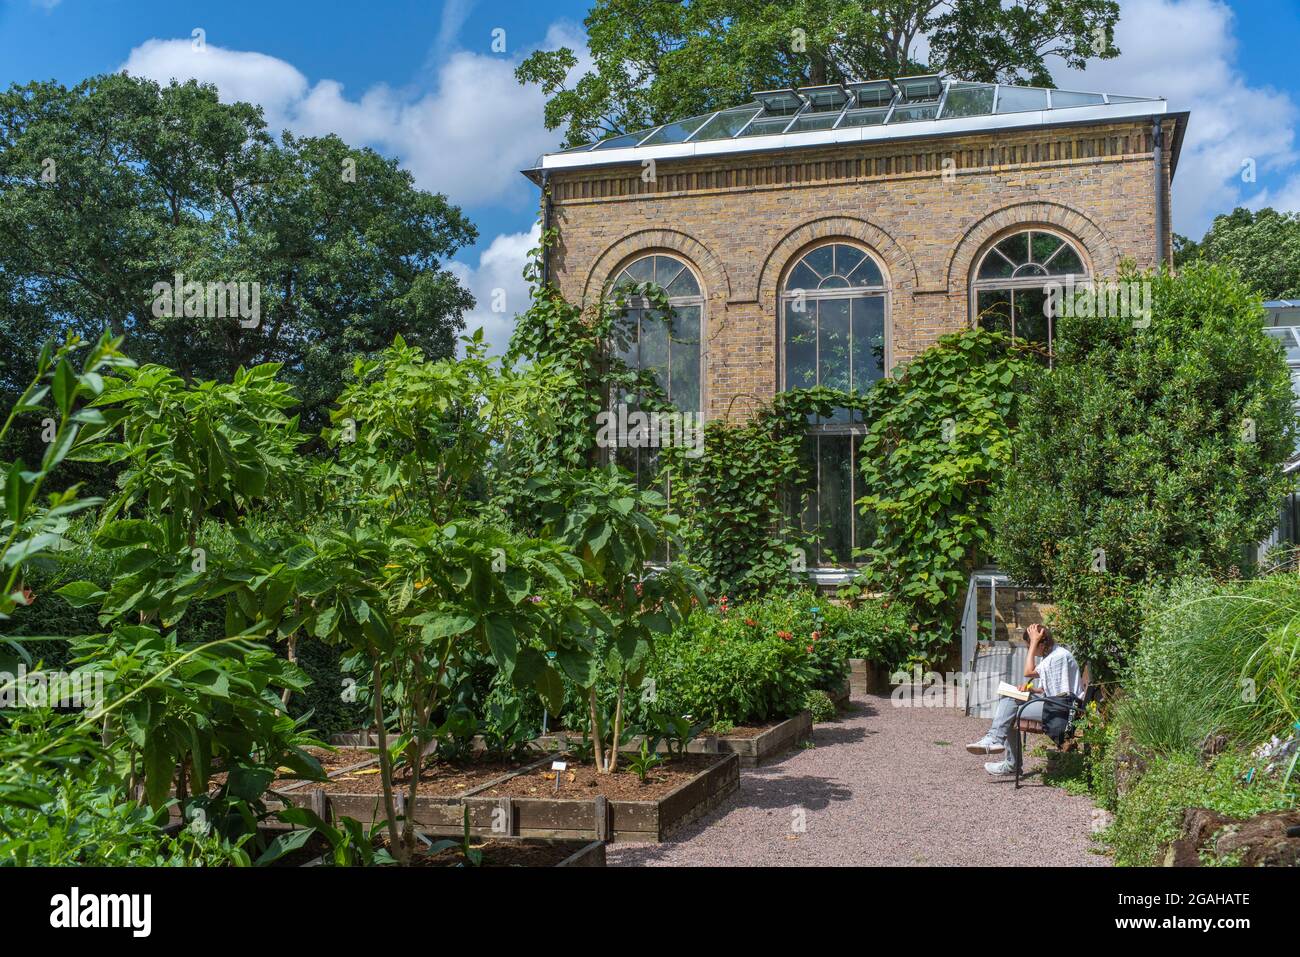 Botanical garden with beautiful Greenhouse or Glasshouse Stock Photo